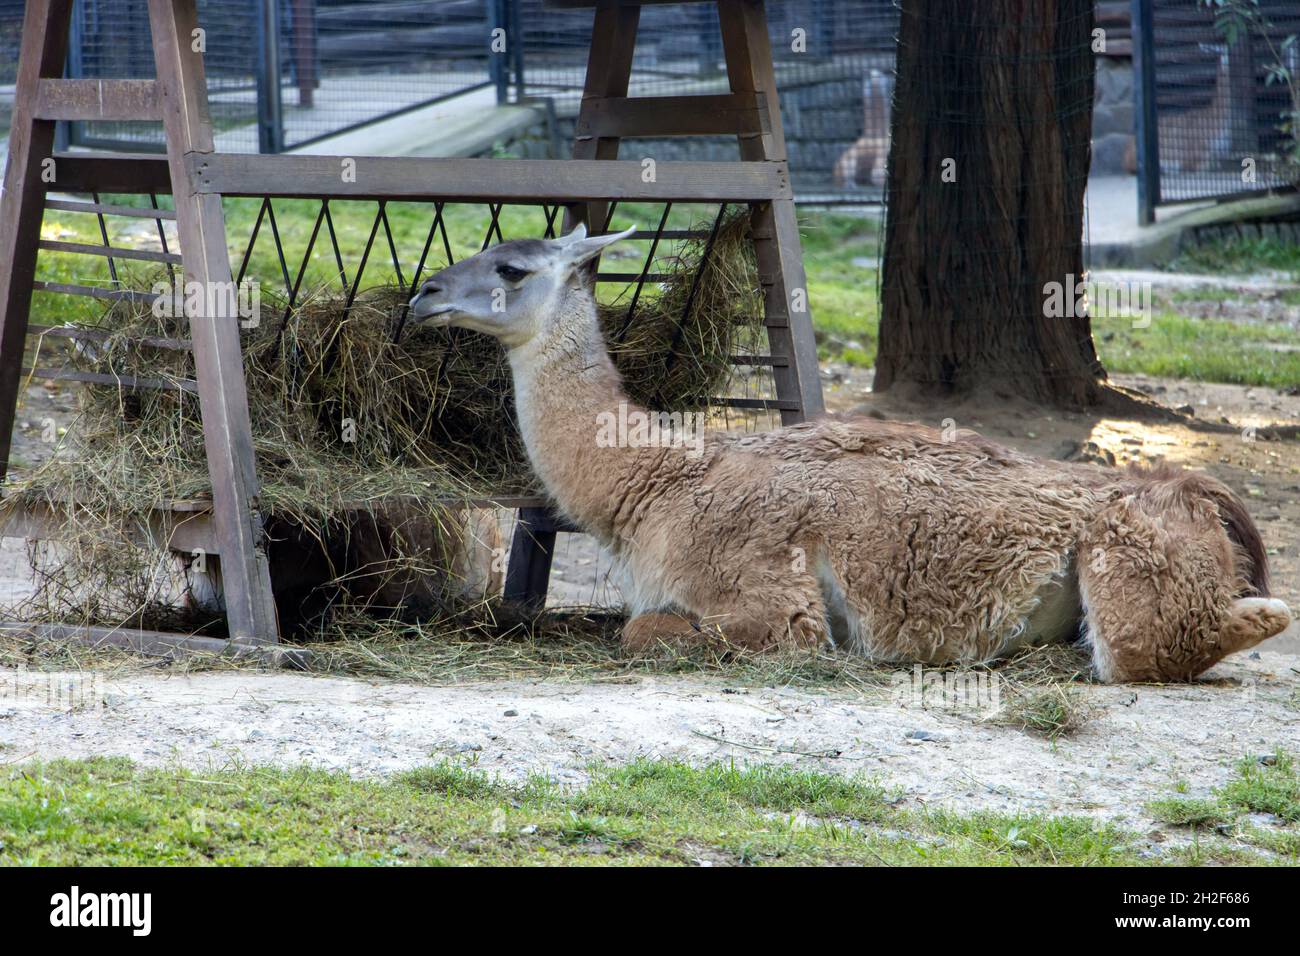 The guanaco (Lama guanicoe) eat hay from the feeder. Stock Photo